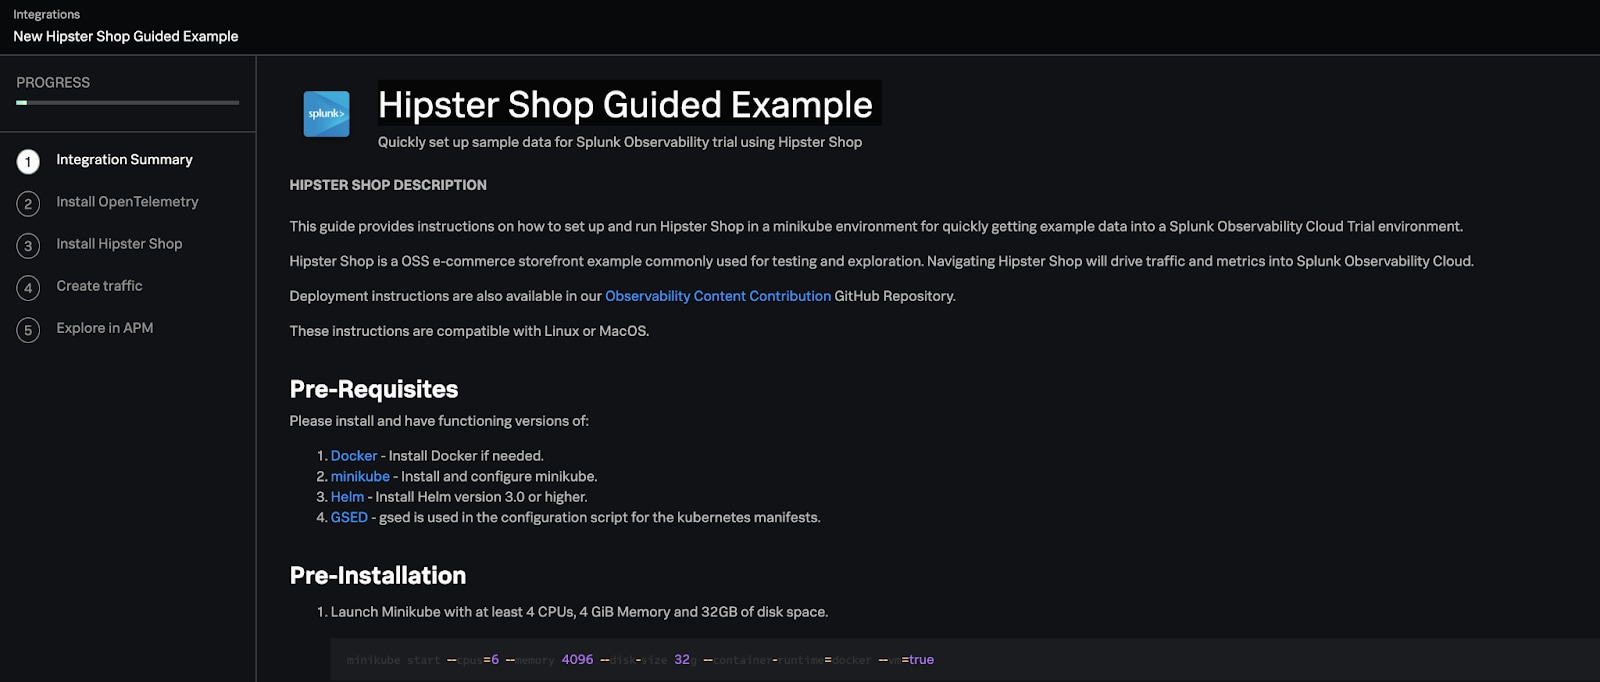 Splunk Observability Cloudの統合環境で利用できるHipster Shop Guided Example